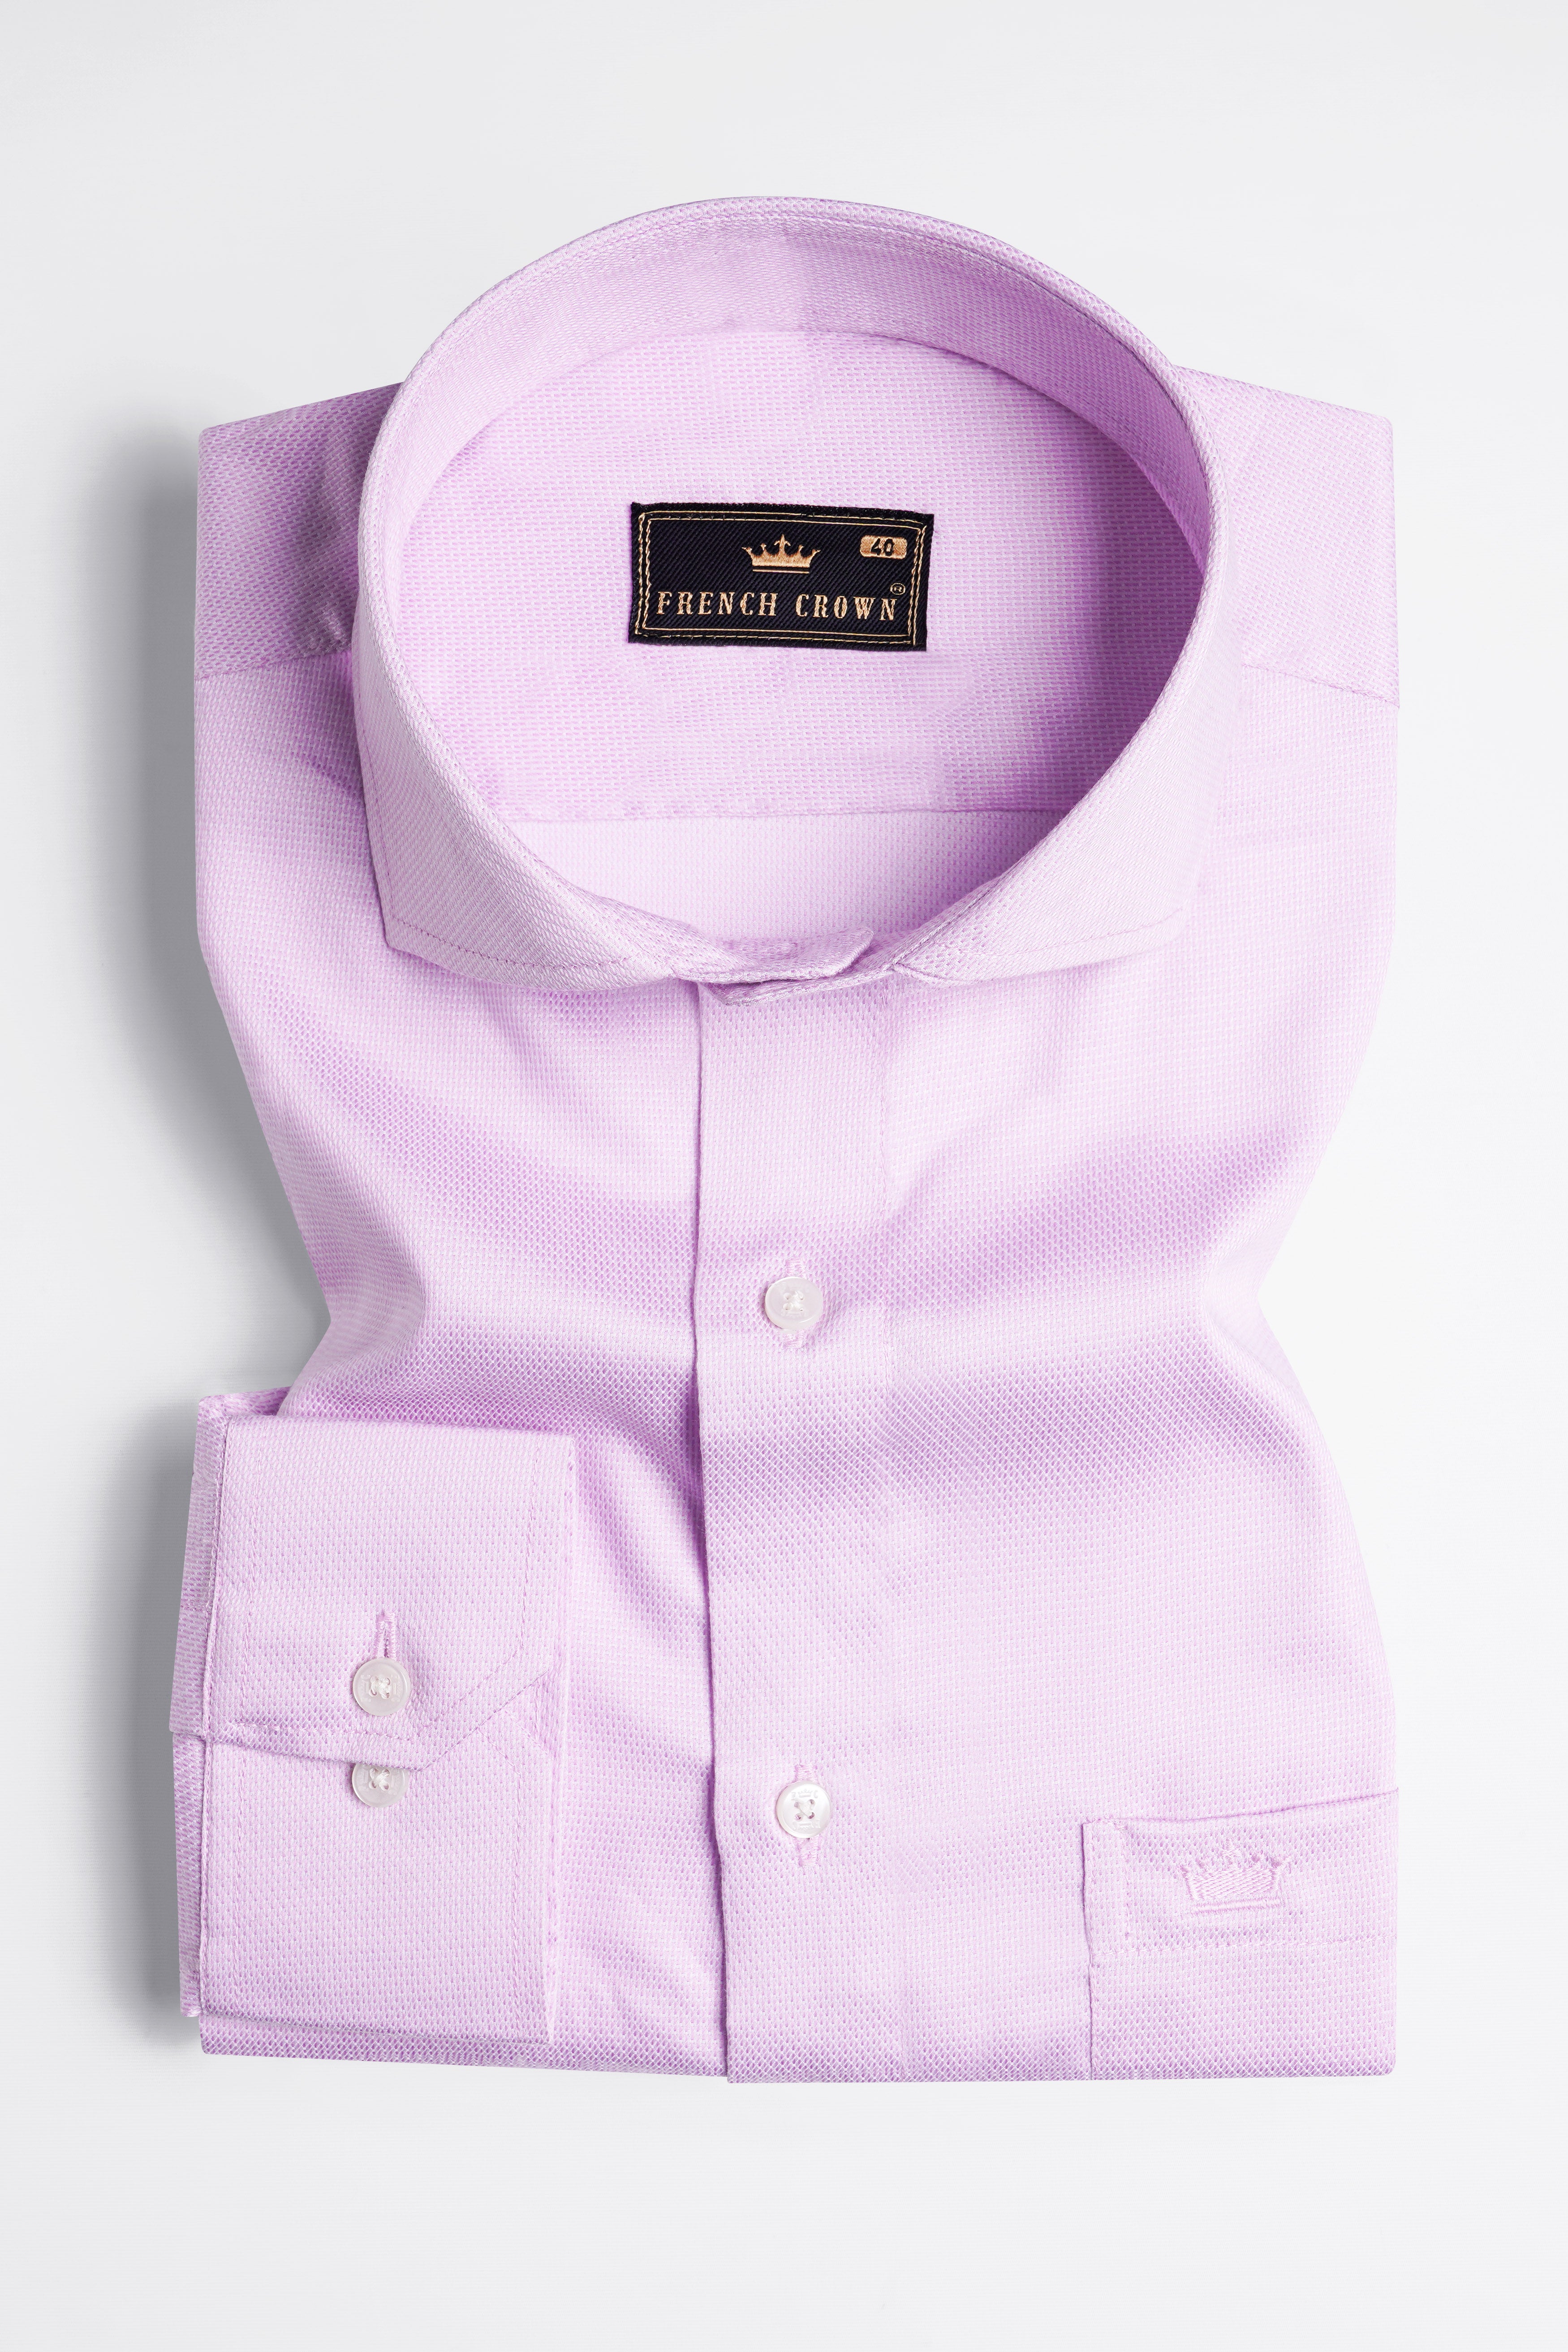 Moonraker Pink Dobby Textured Premium Giza Cotton Shirt